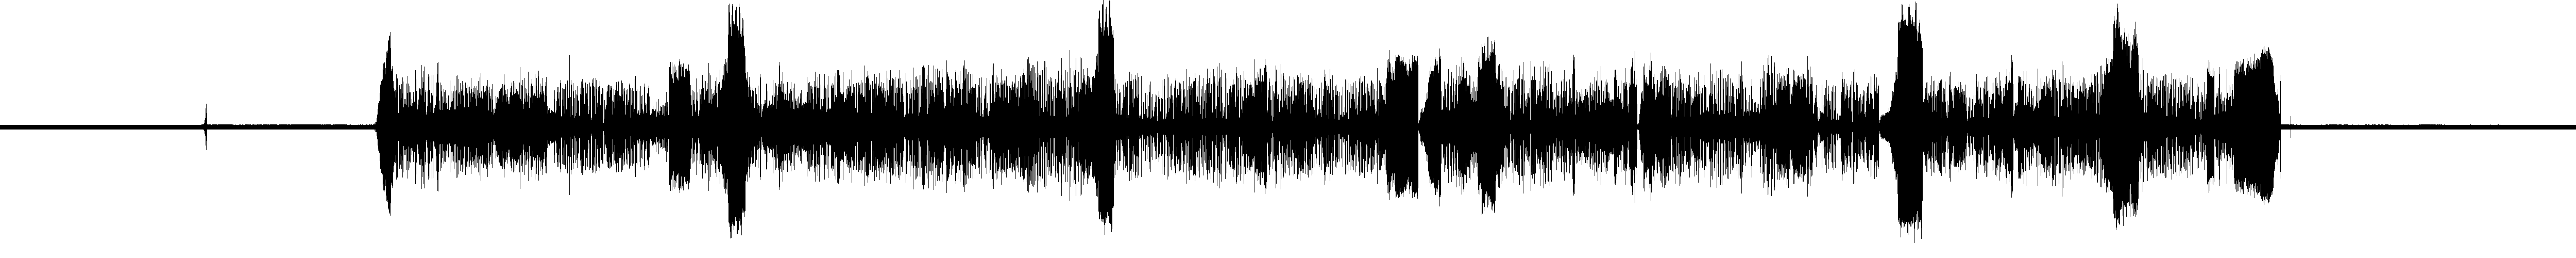 Waveform image example